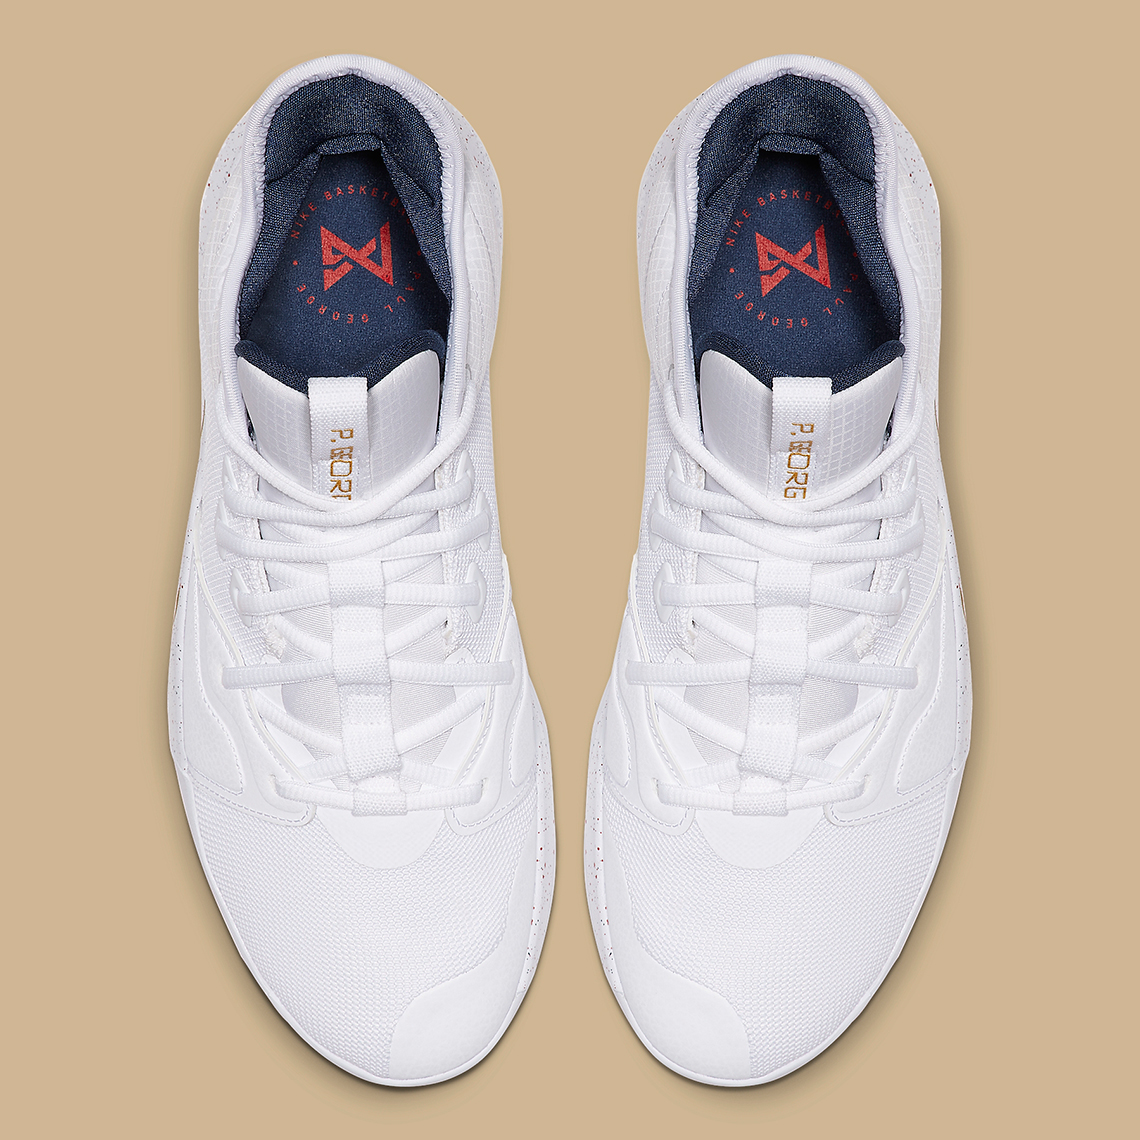 Persona responsable Catarata píldora Nike PG 3 White Gold Navy AO2607-100 Release Date | SneakerNews.com